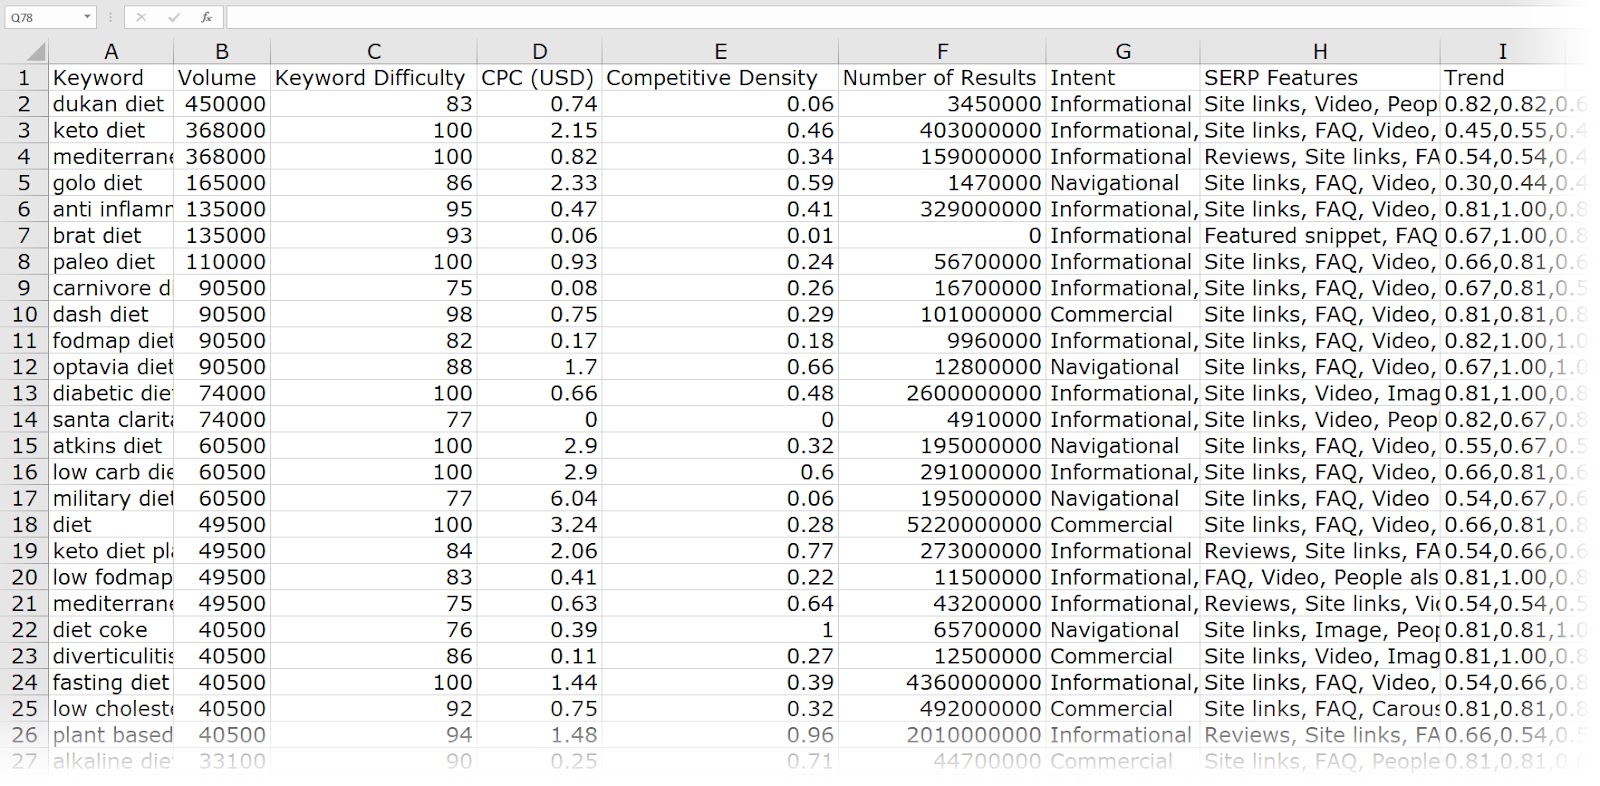 Keyword Magic Tool. data exported to Microsoft Excel spreadsheet